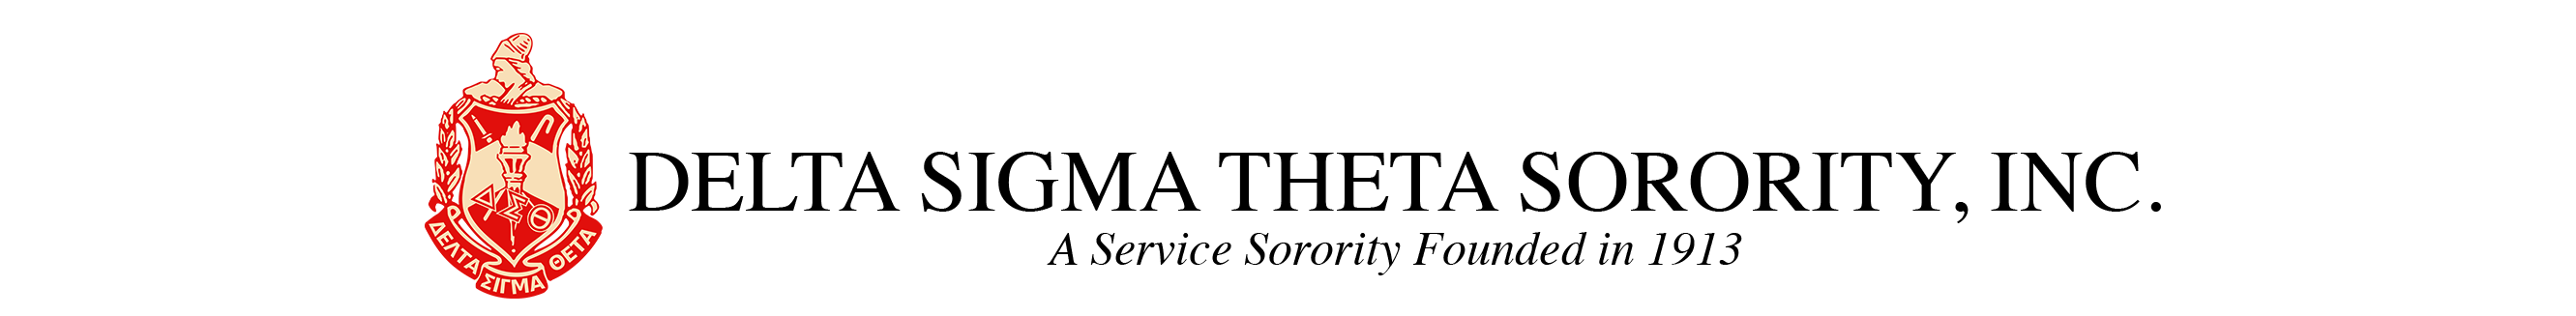 Black Sororities Logo - Delta Sigma Theta Sorority, Inc